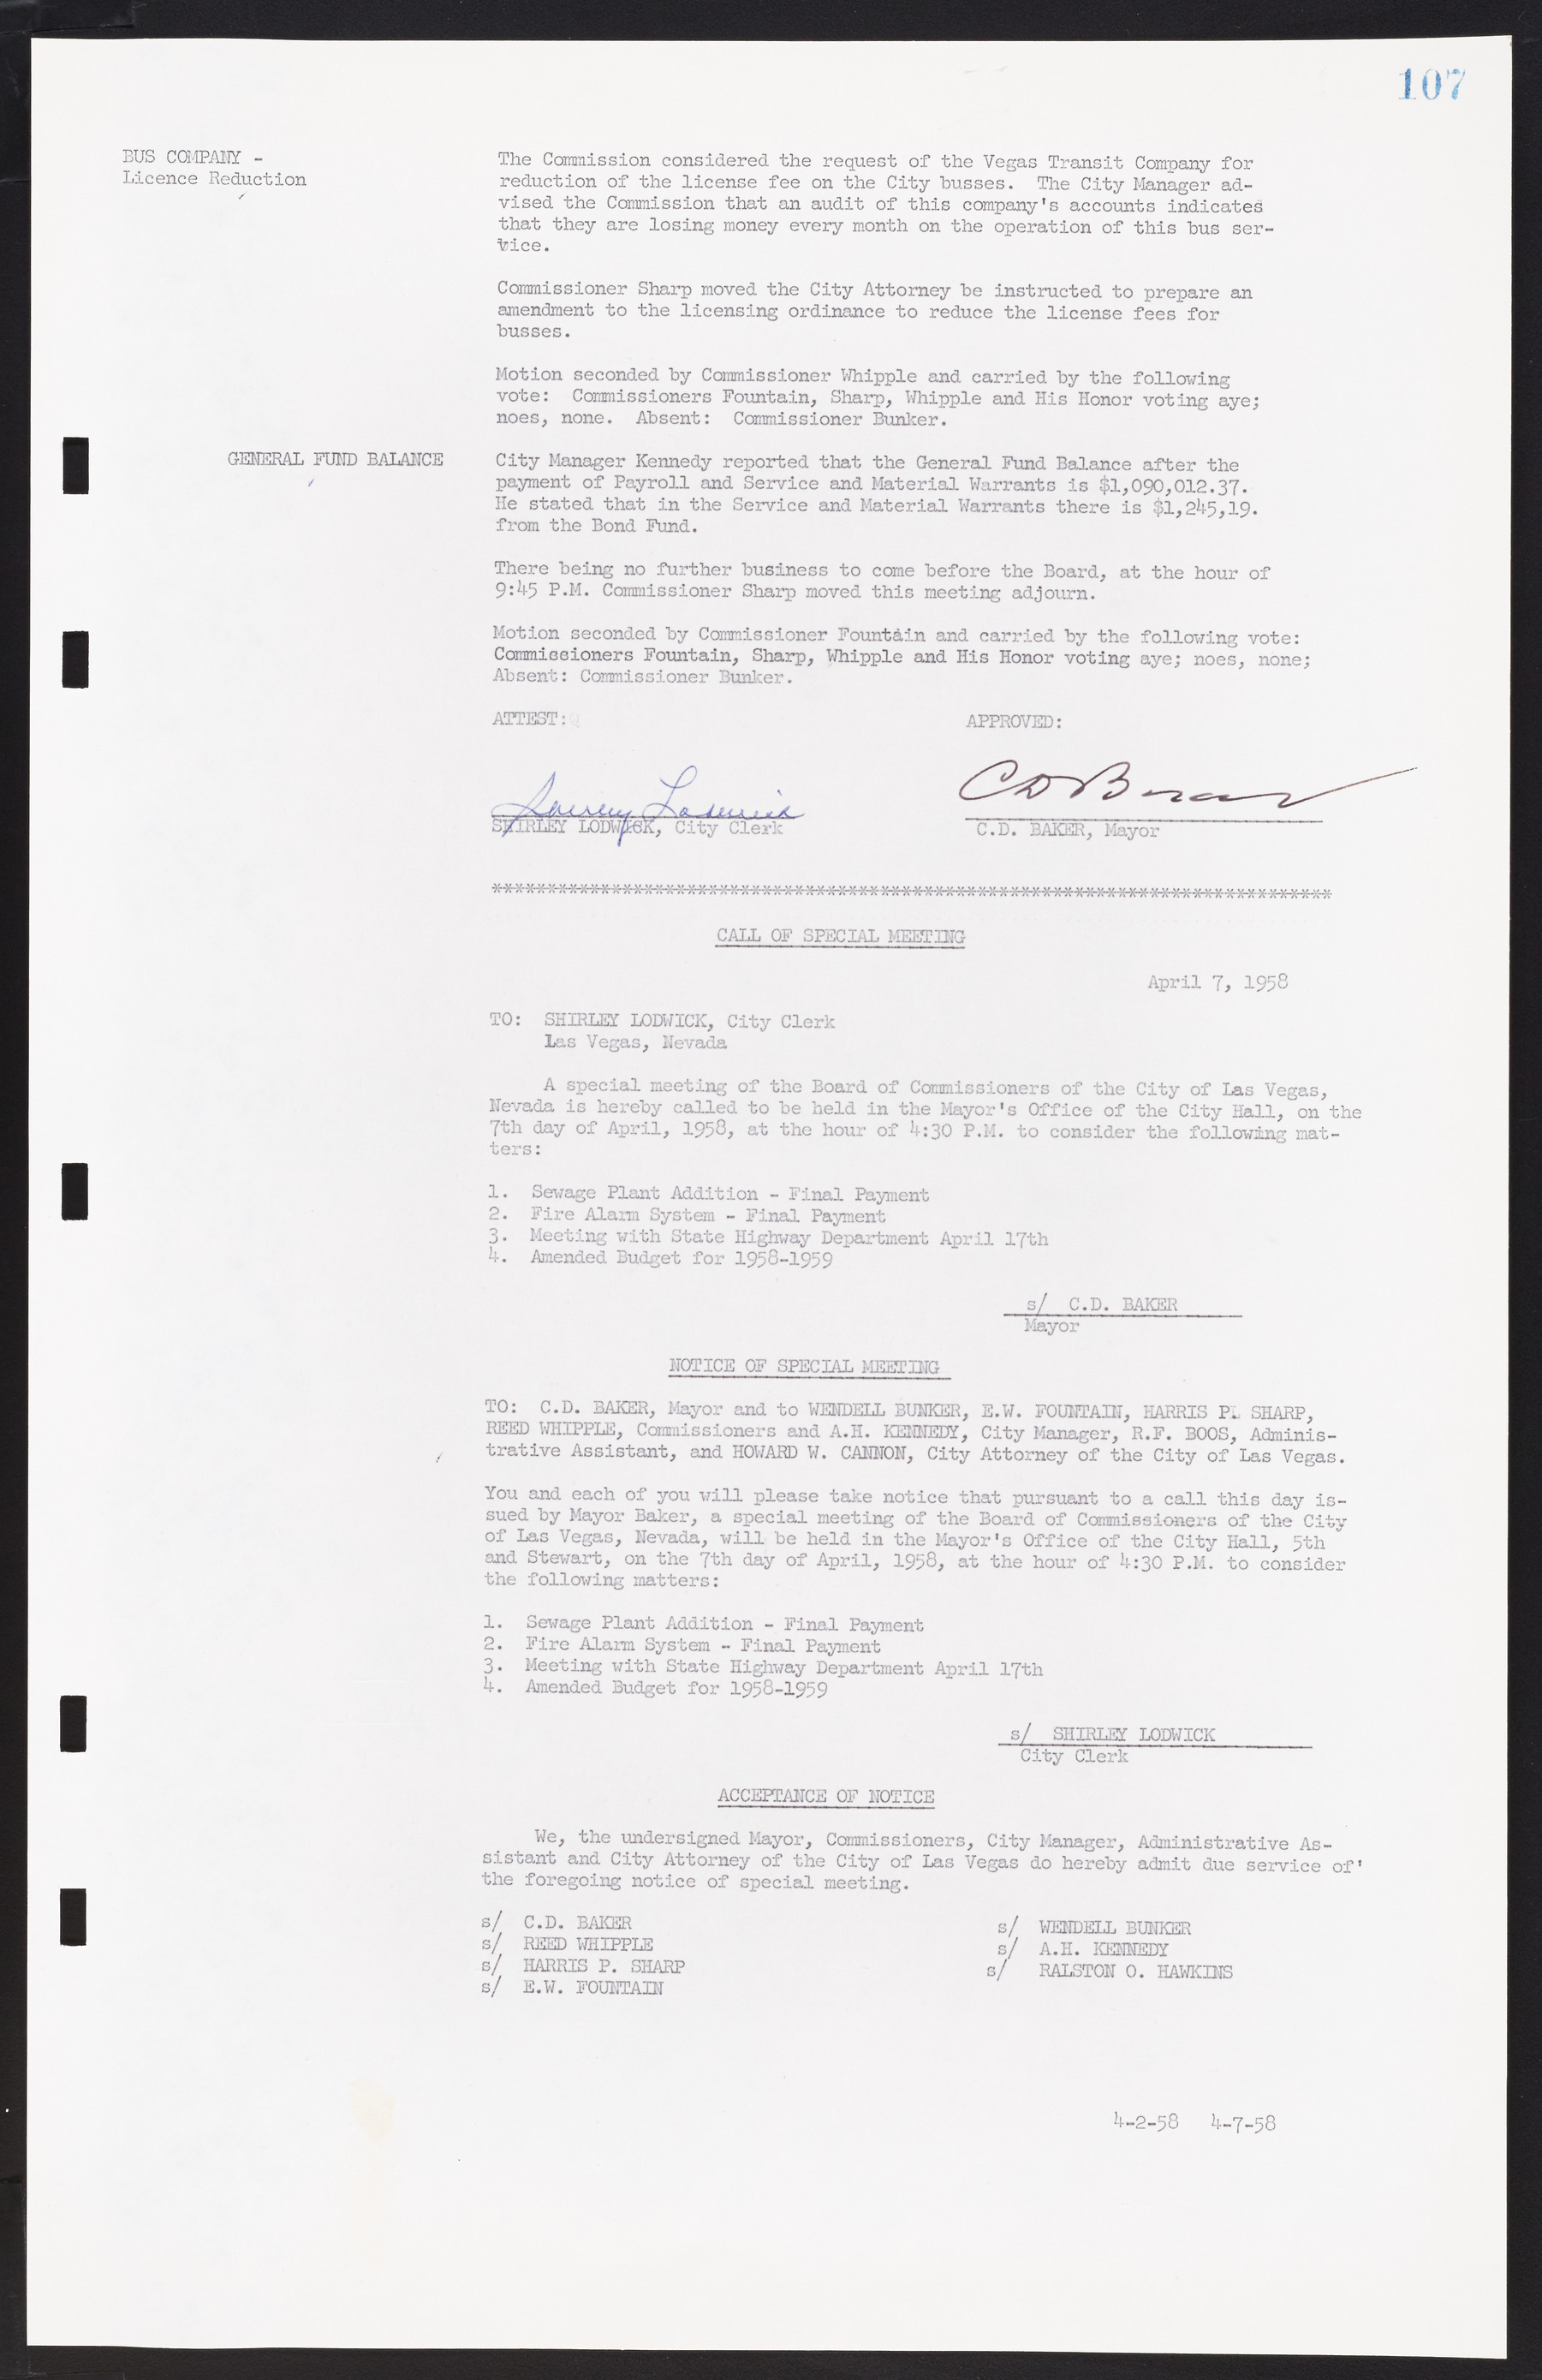 Las Vegas City Commission Minutes, November 20, 1957 to December 2, 1959, lvc000011-111